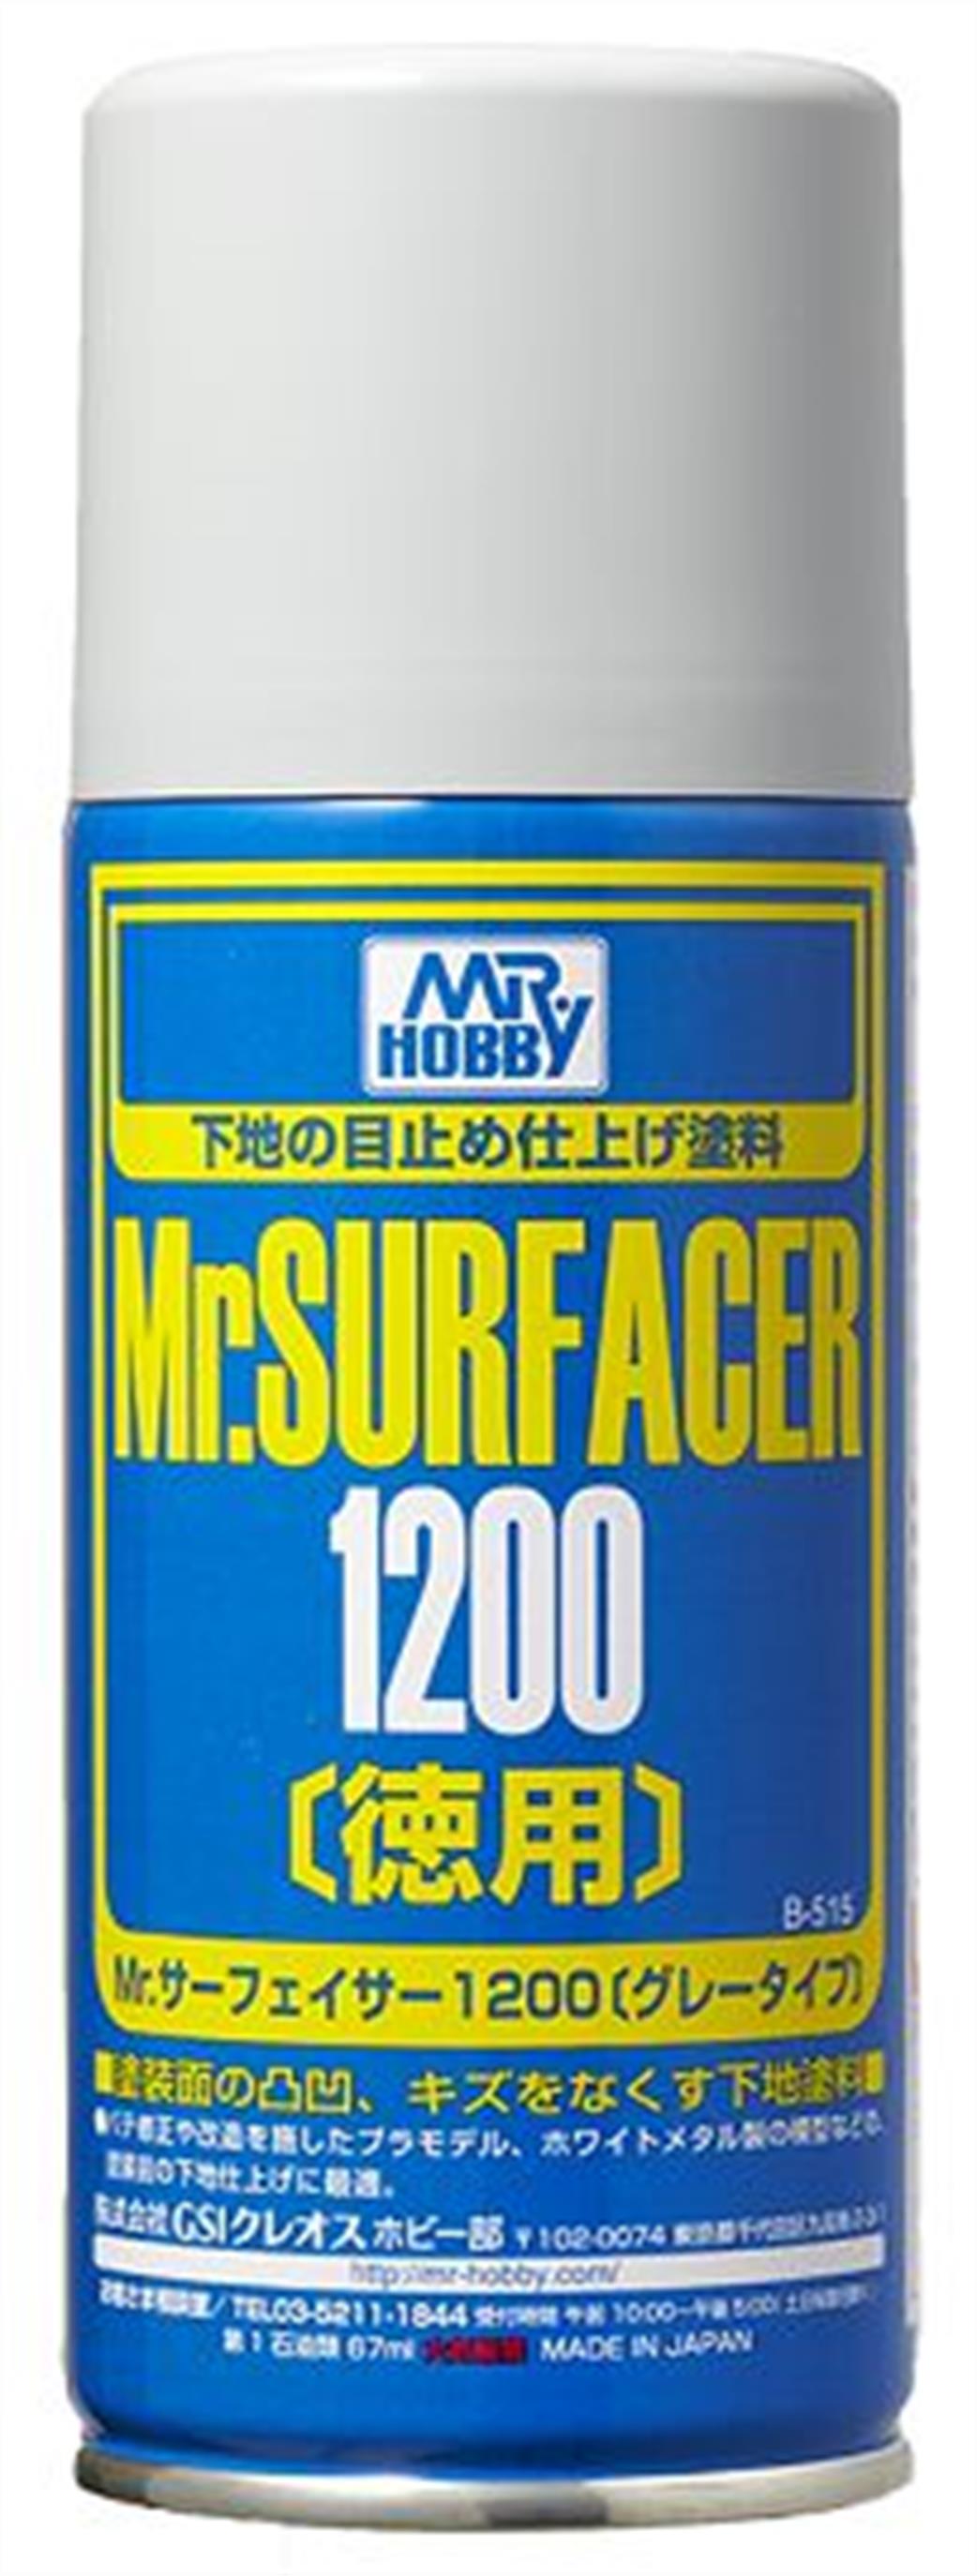 Gunze Sangyo  B515 Mr Surfacer  1200 170ml Spray Can